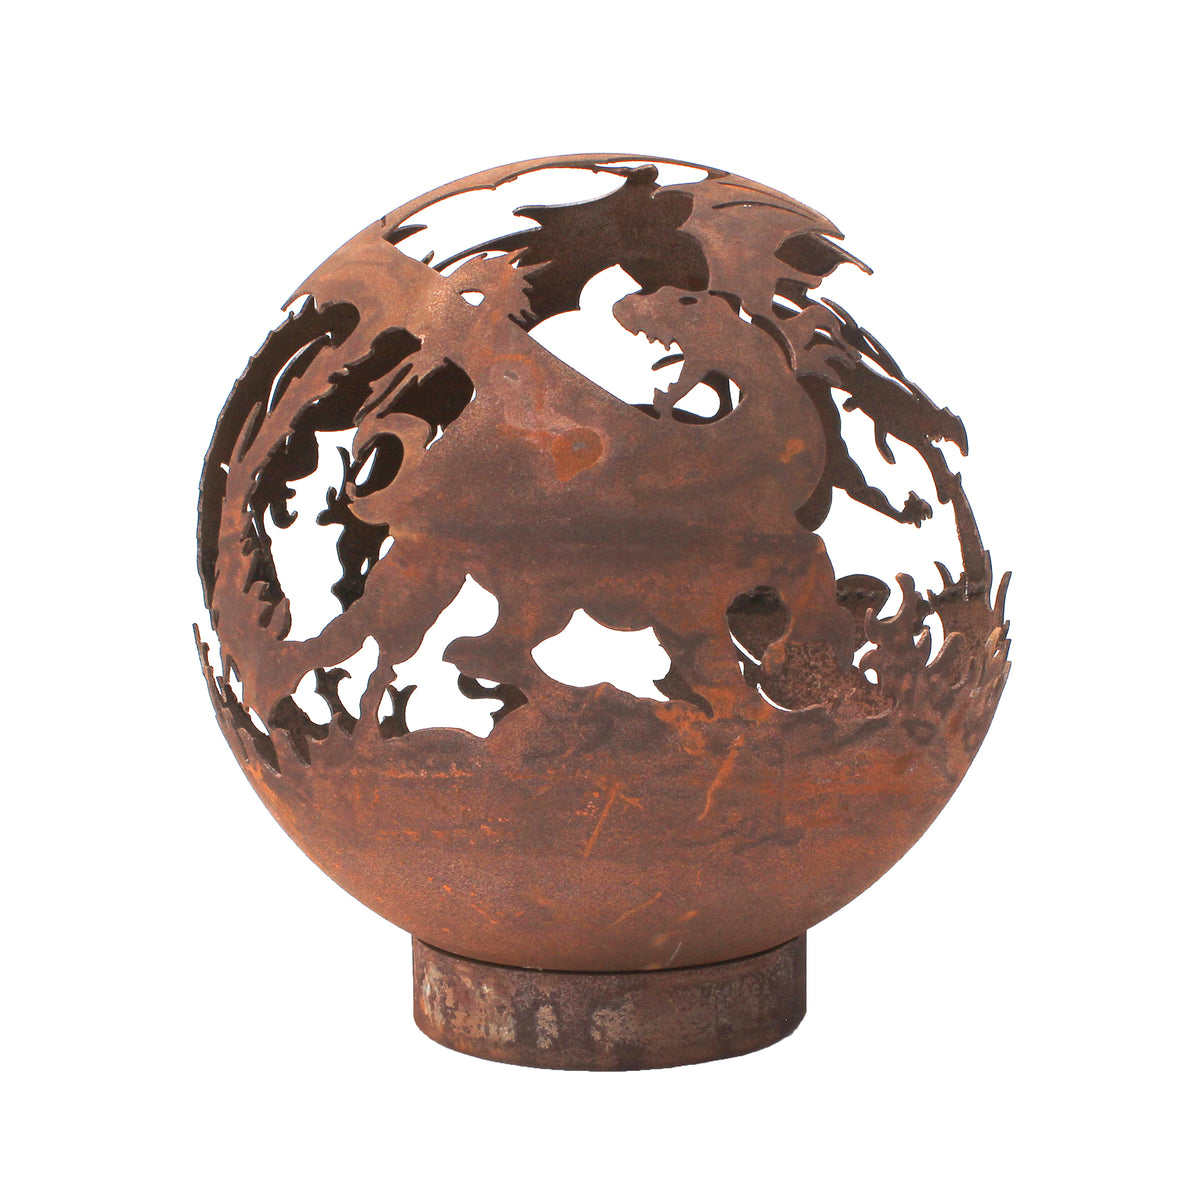 Garden Fire Ball 50cm Dragon Design with Rust Finish